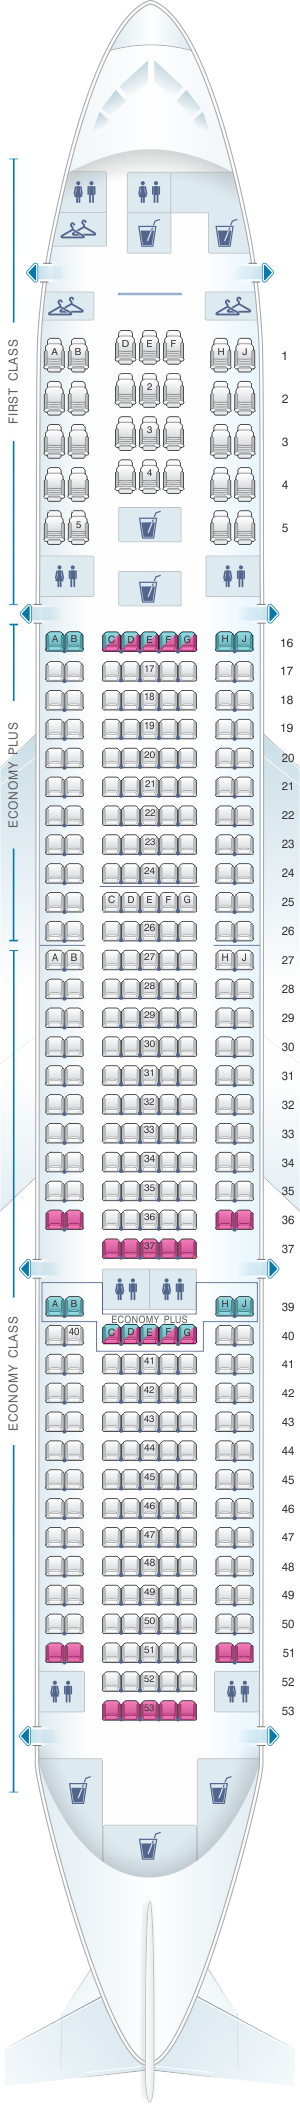 Seat Map United Airlines Boeing B777 200 (777) - version 3 | SeatMaestro